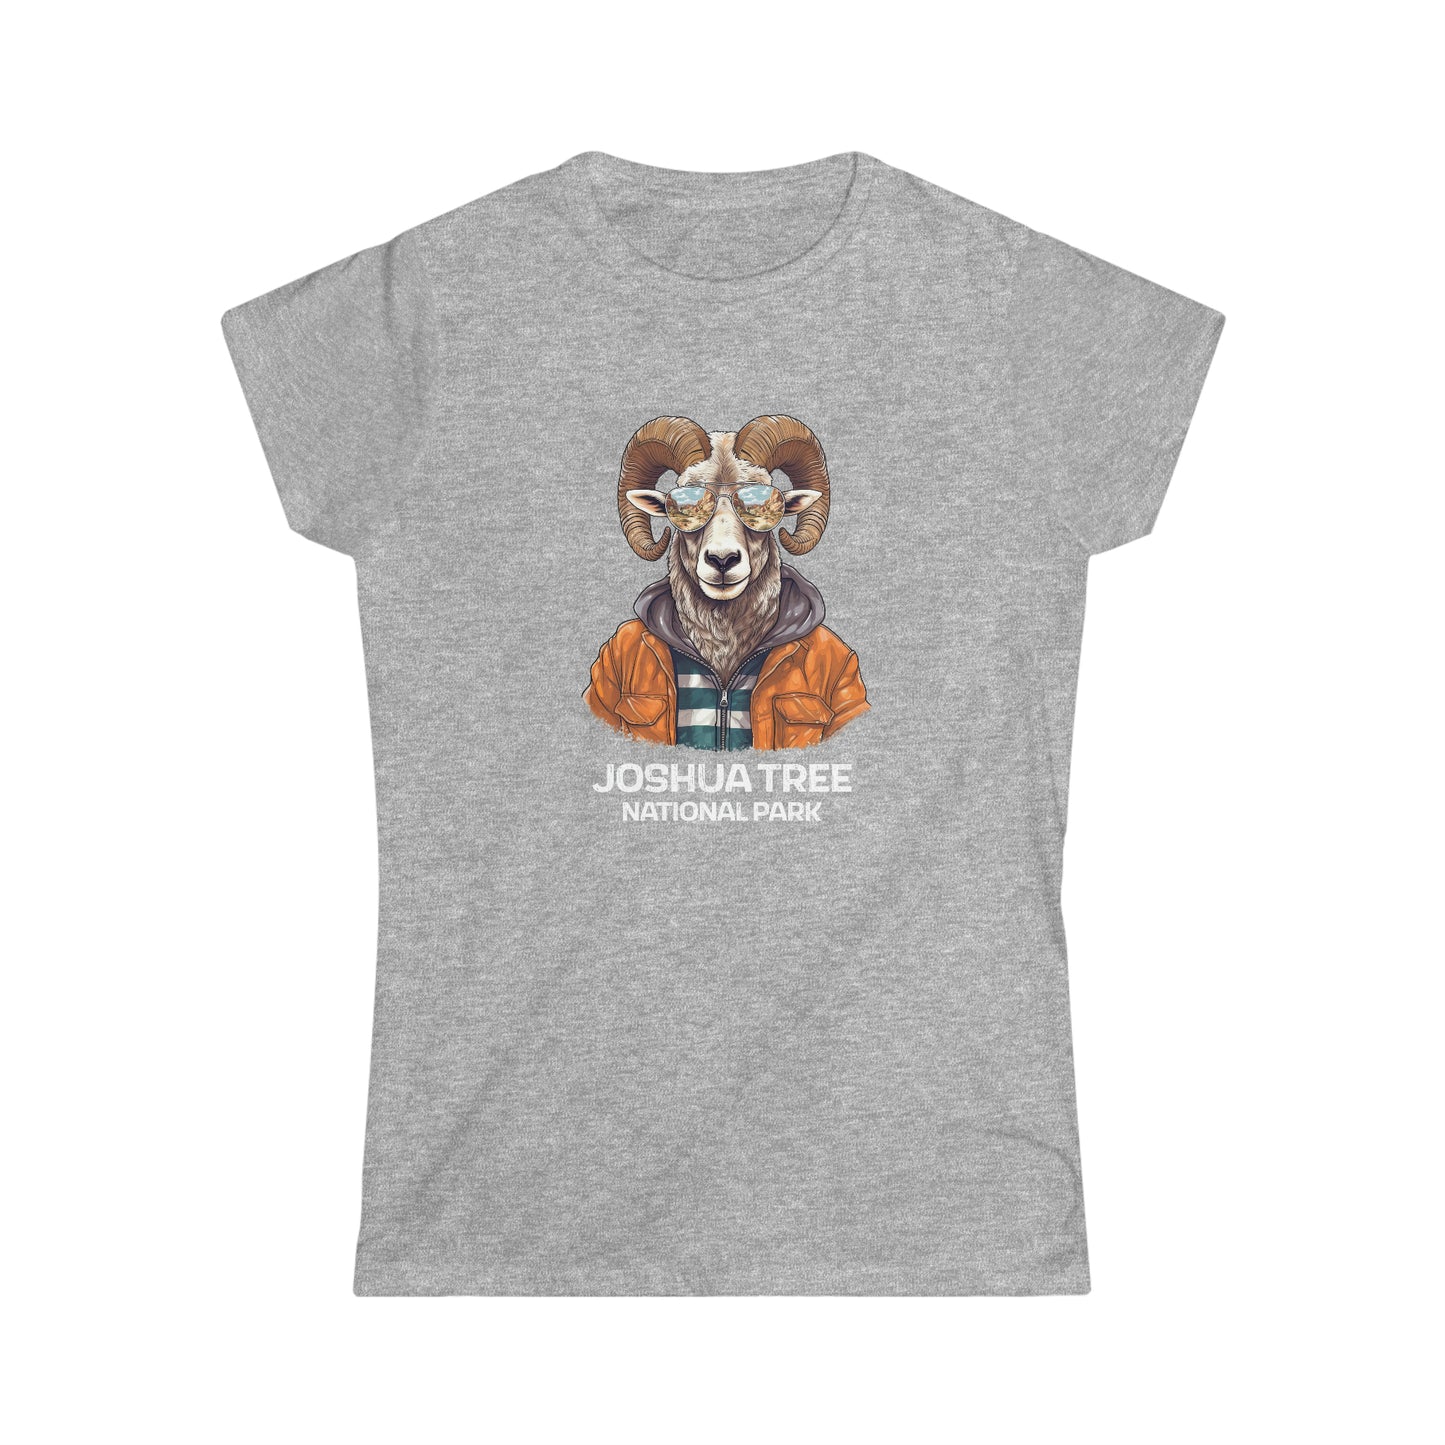 Joshua Tree National Park Women's T-Shirt - Cool Bighorn Sheep